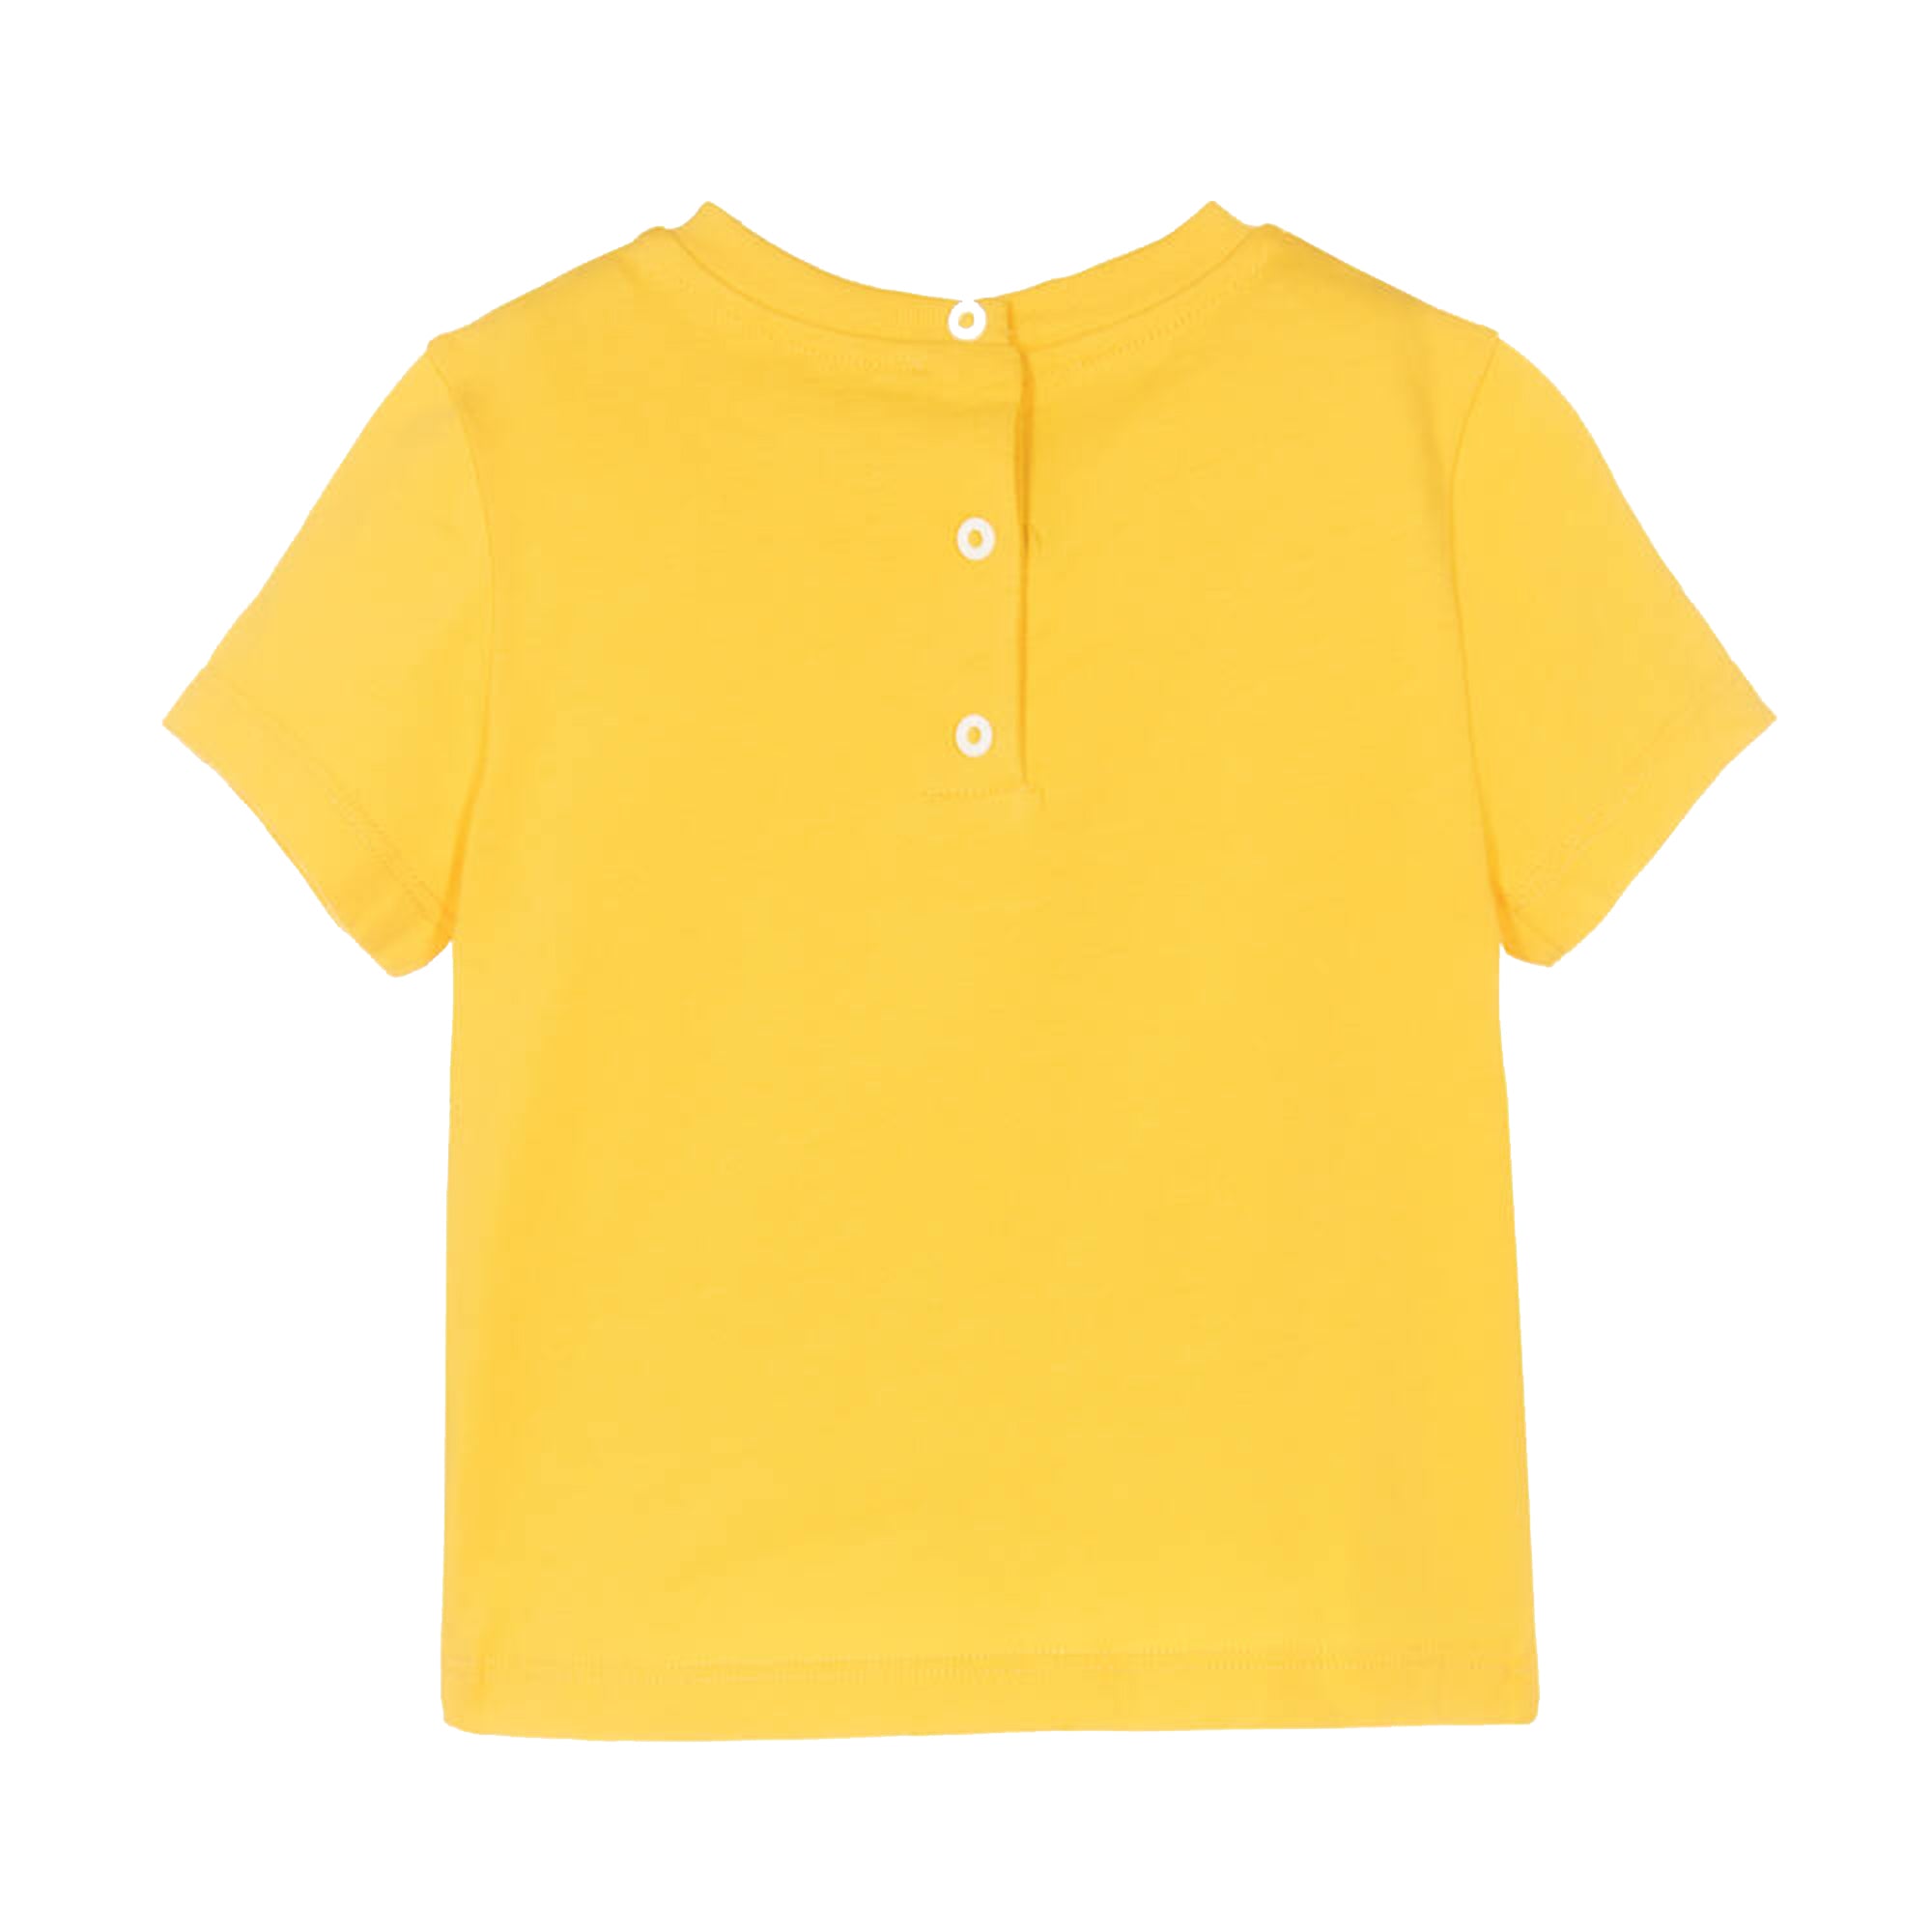 Fendi Baby Boys Logo T-shirt Yellow 12M